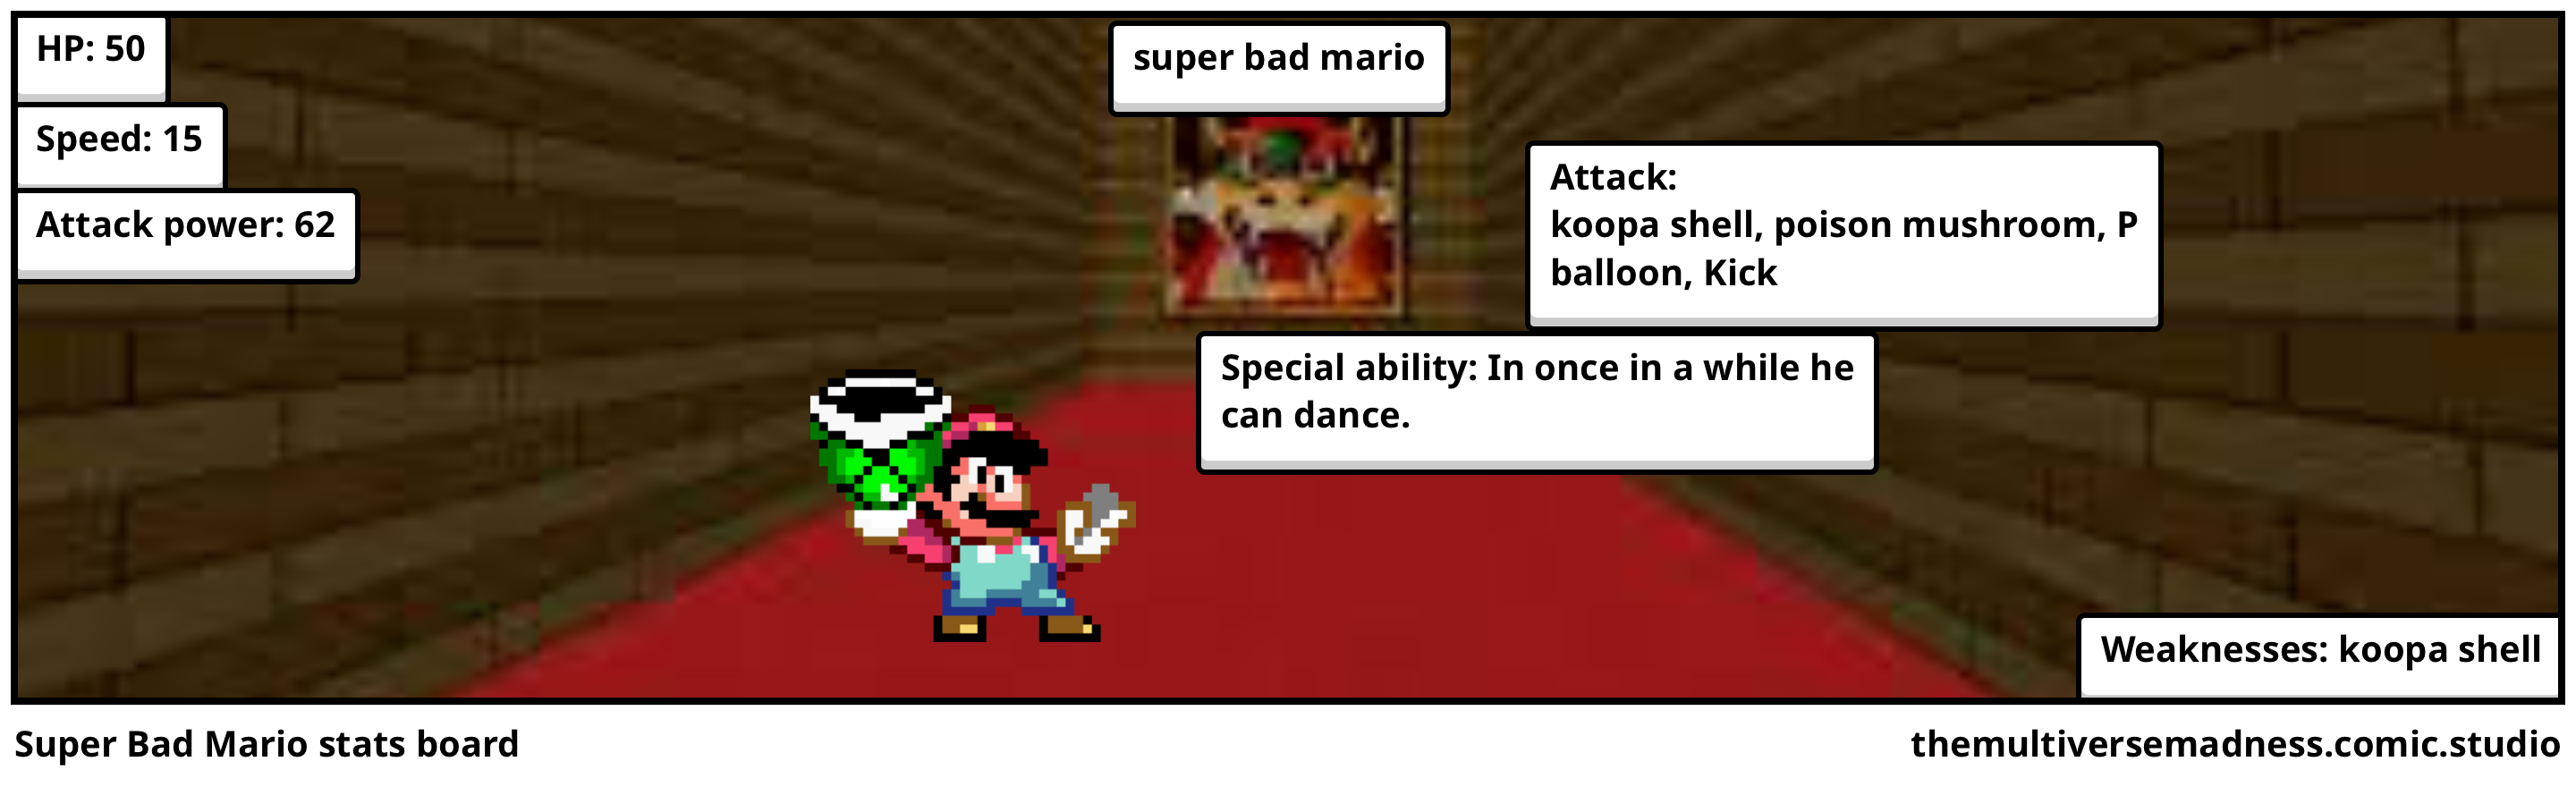 Super Bad Mario stats board